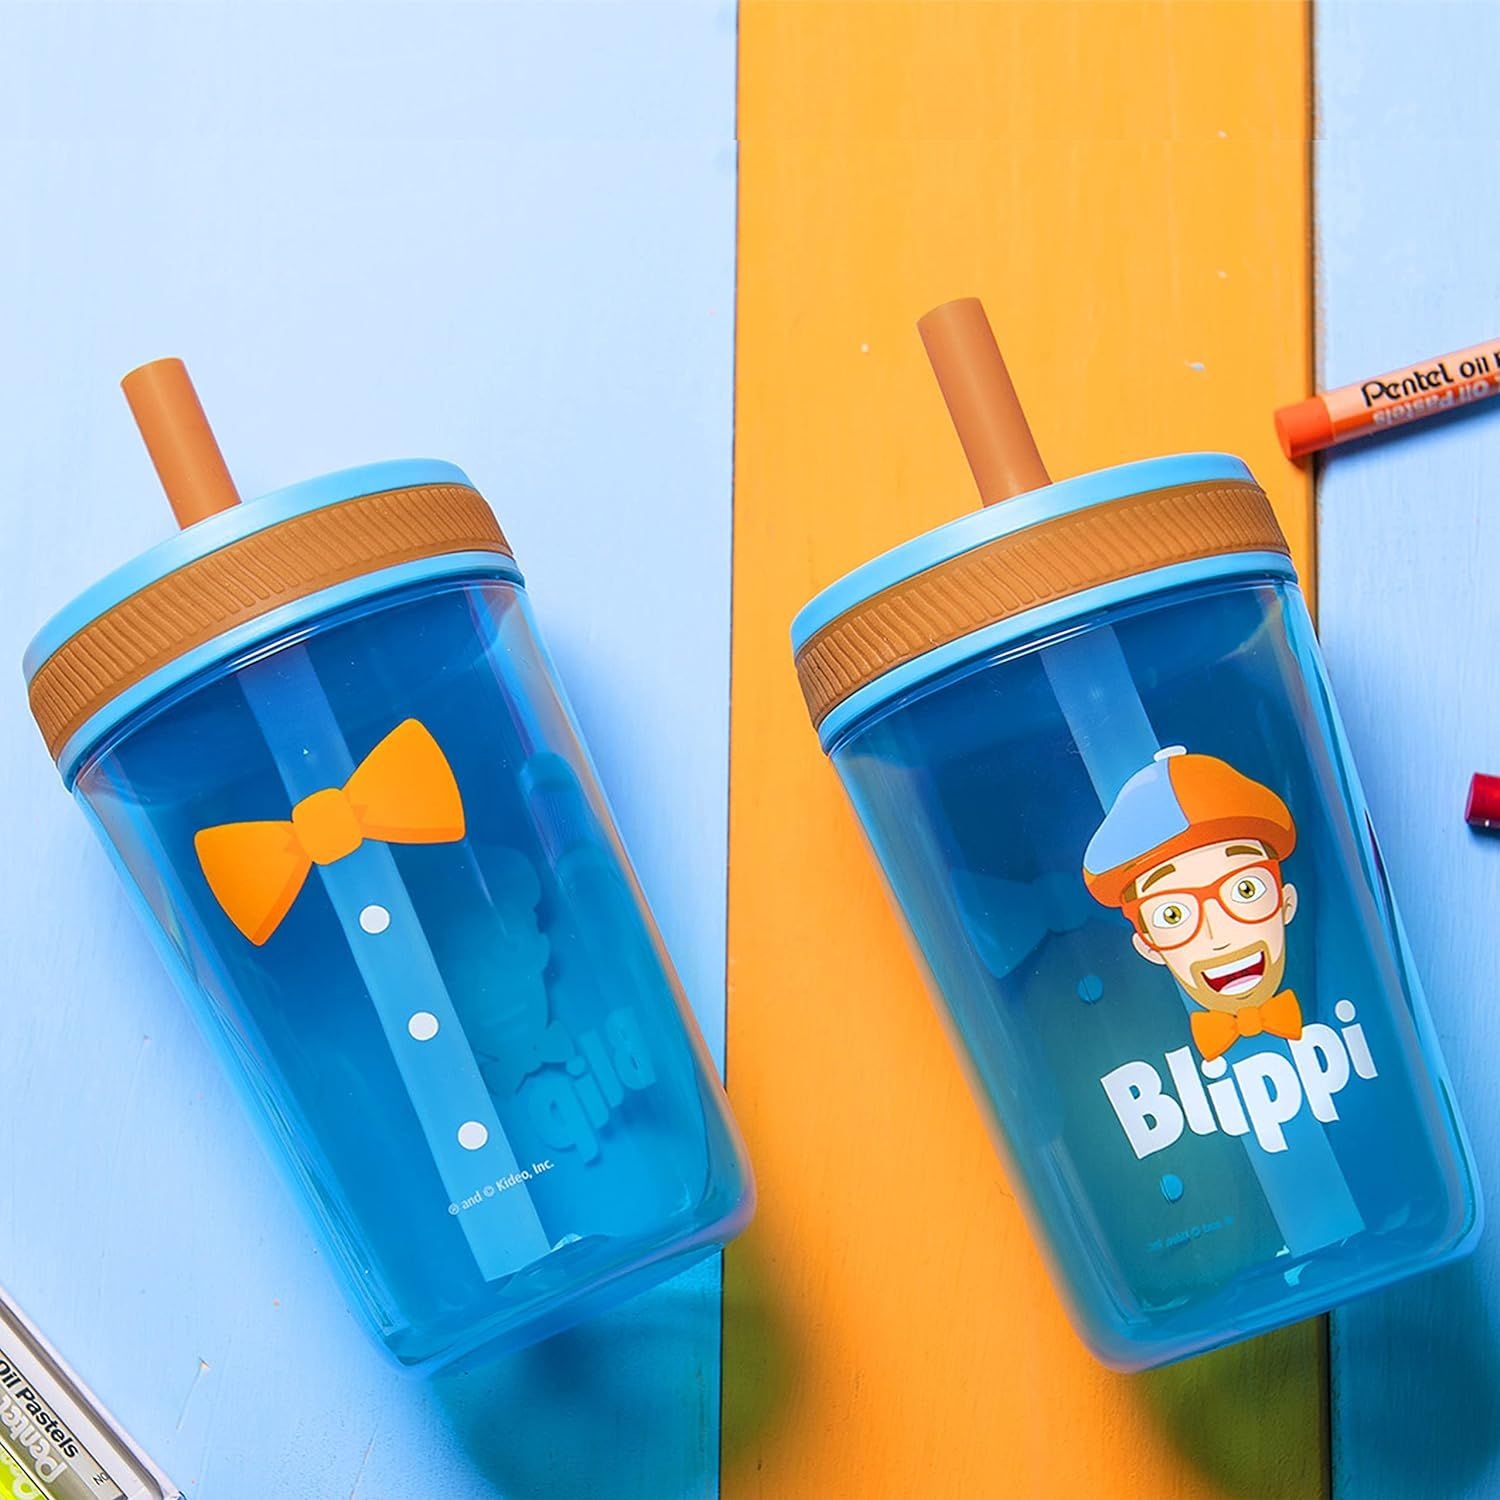 Zak Designs Blippi Kelso Toddler Cups For Travel or At Home, 15oz